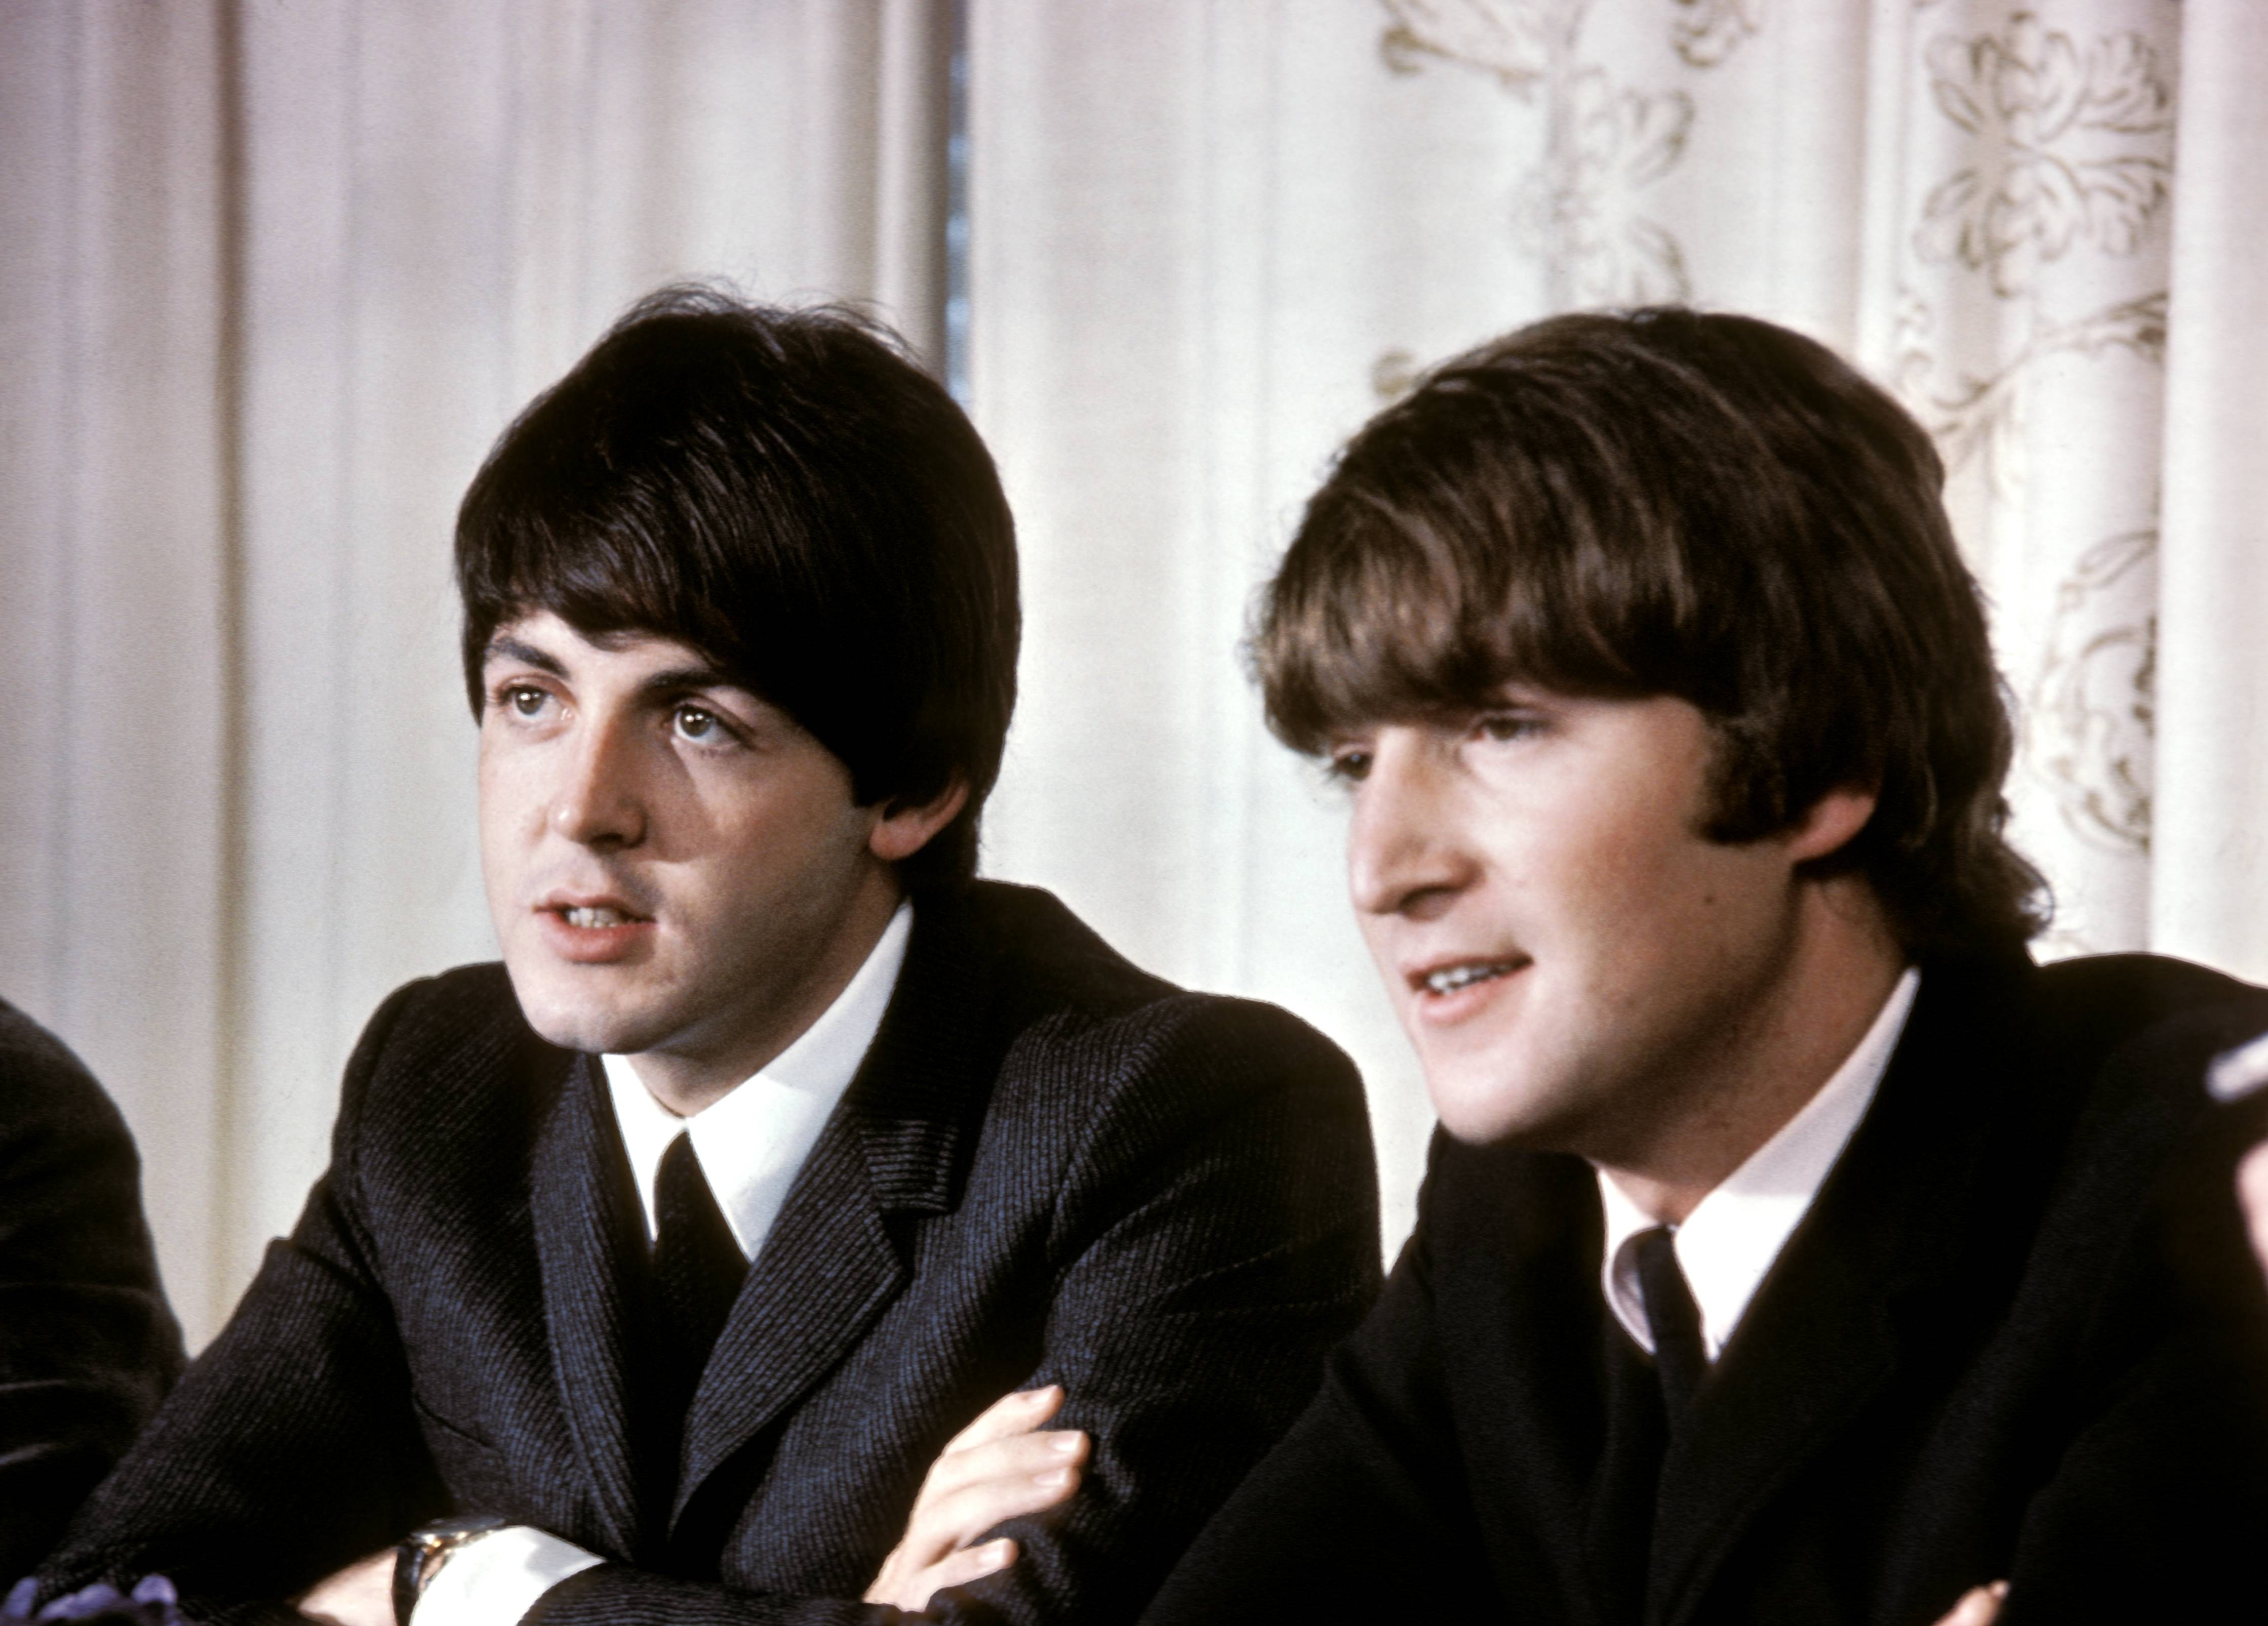 Paul McCartney and John Lennon of the rock band the Beatles